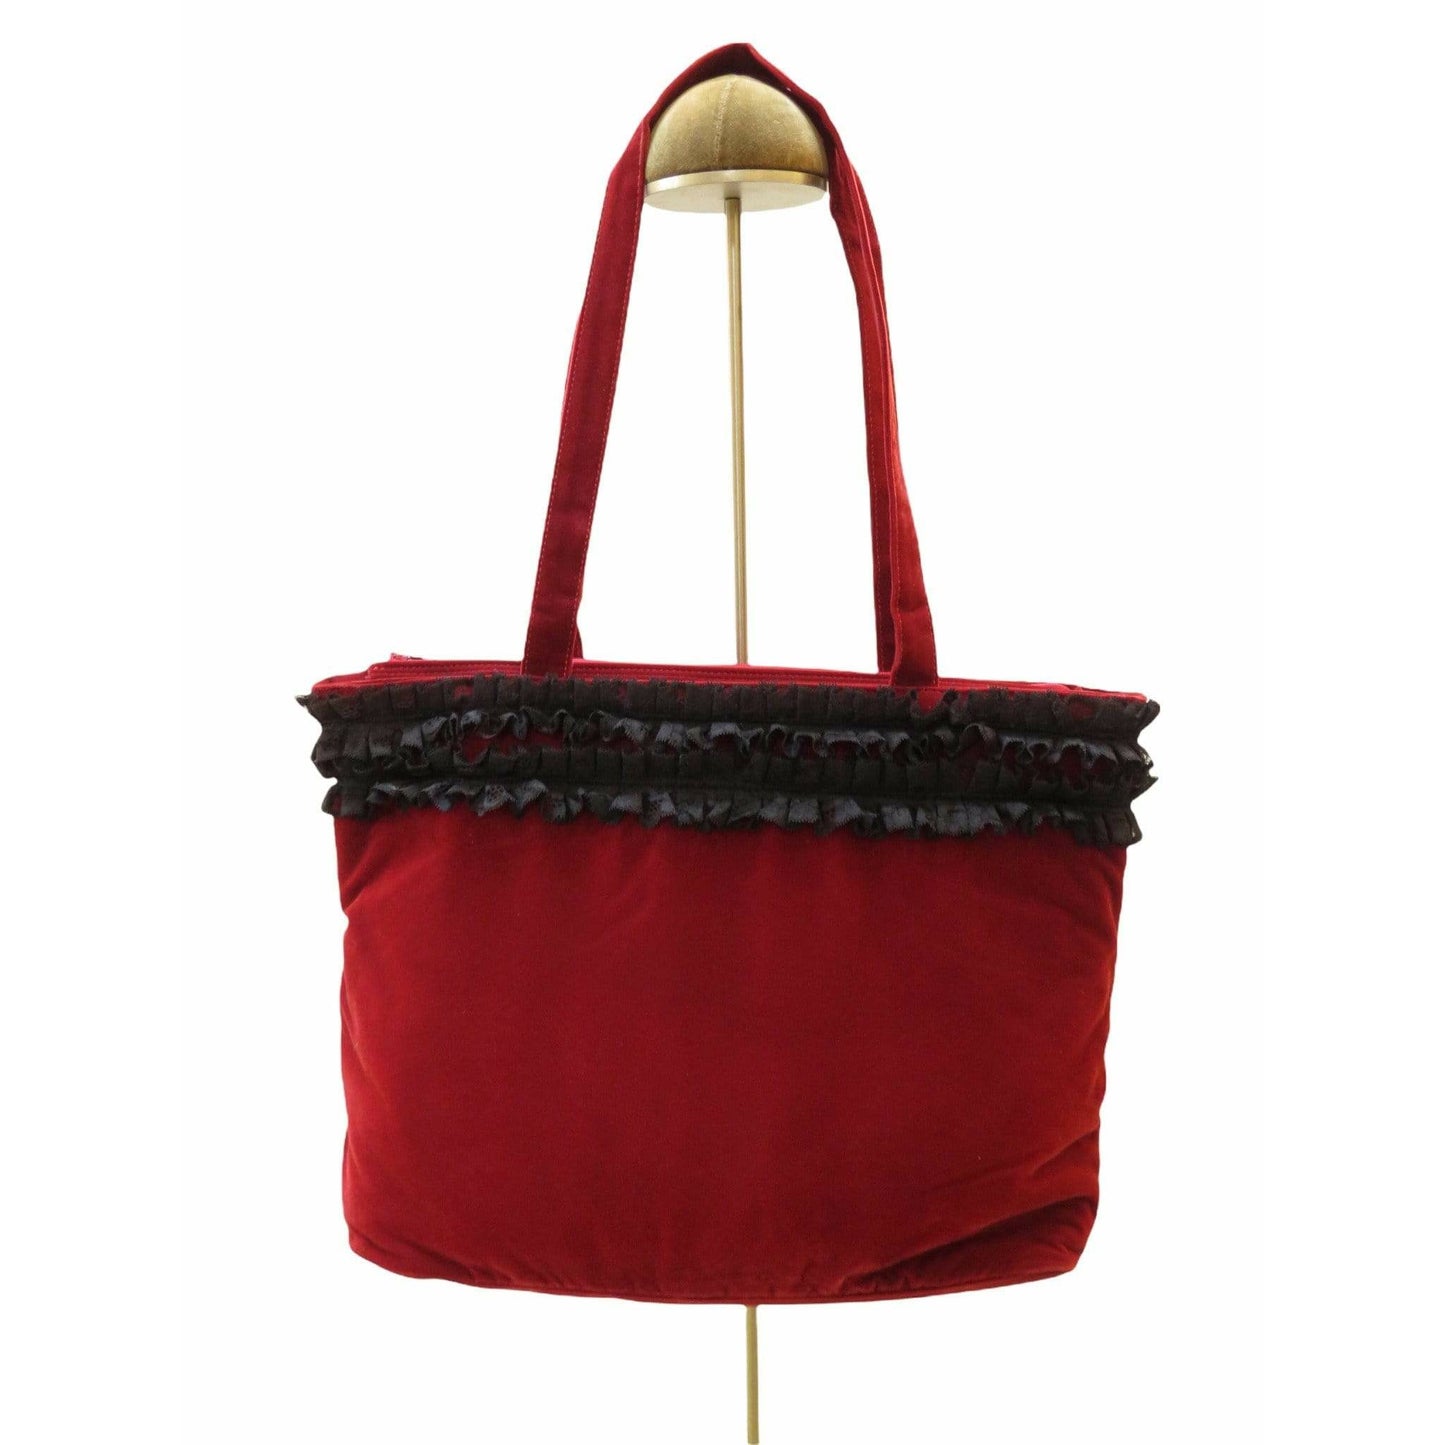 Handbags chantal-thomass-red-velvet-and-lace-shoulder-bag Dark Red